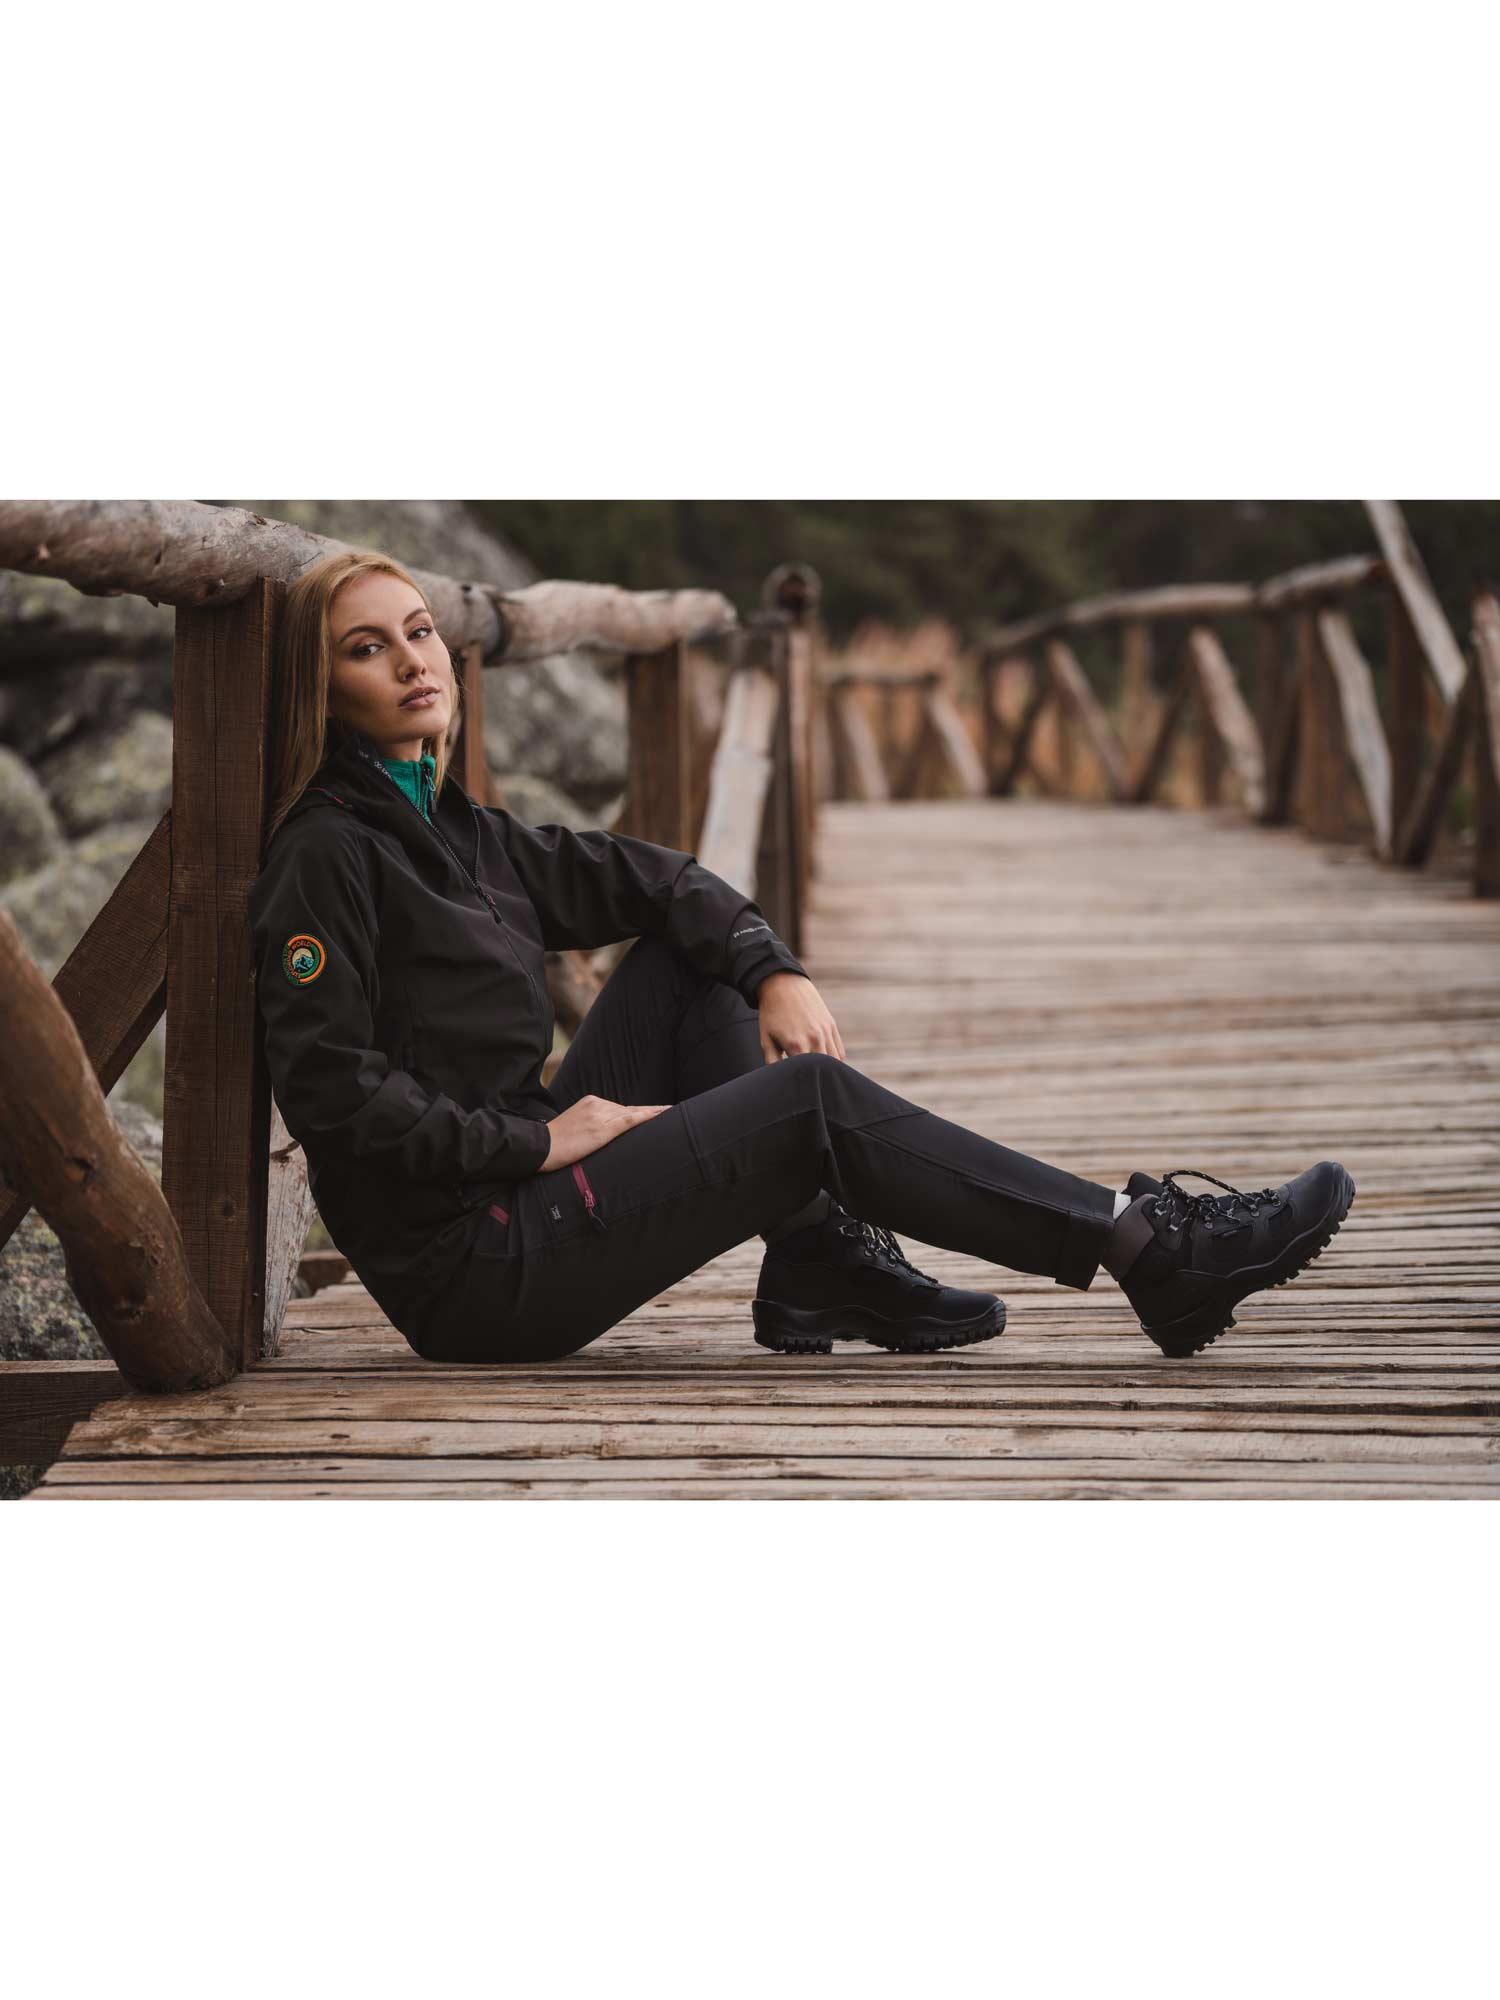 Selected image for BRILLE Ženska jakna Sally Hiking jacket crna